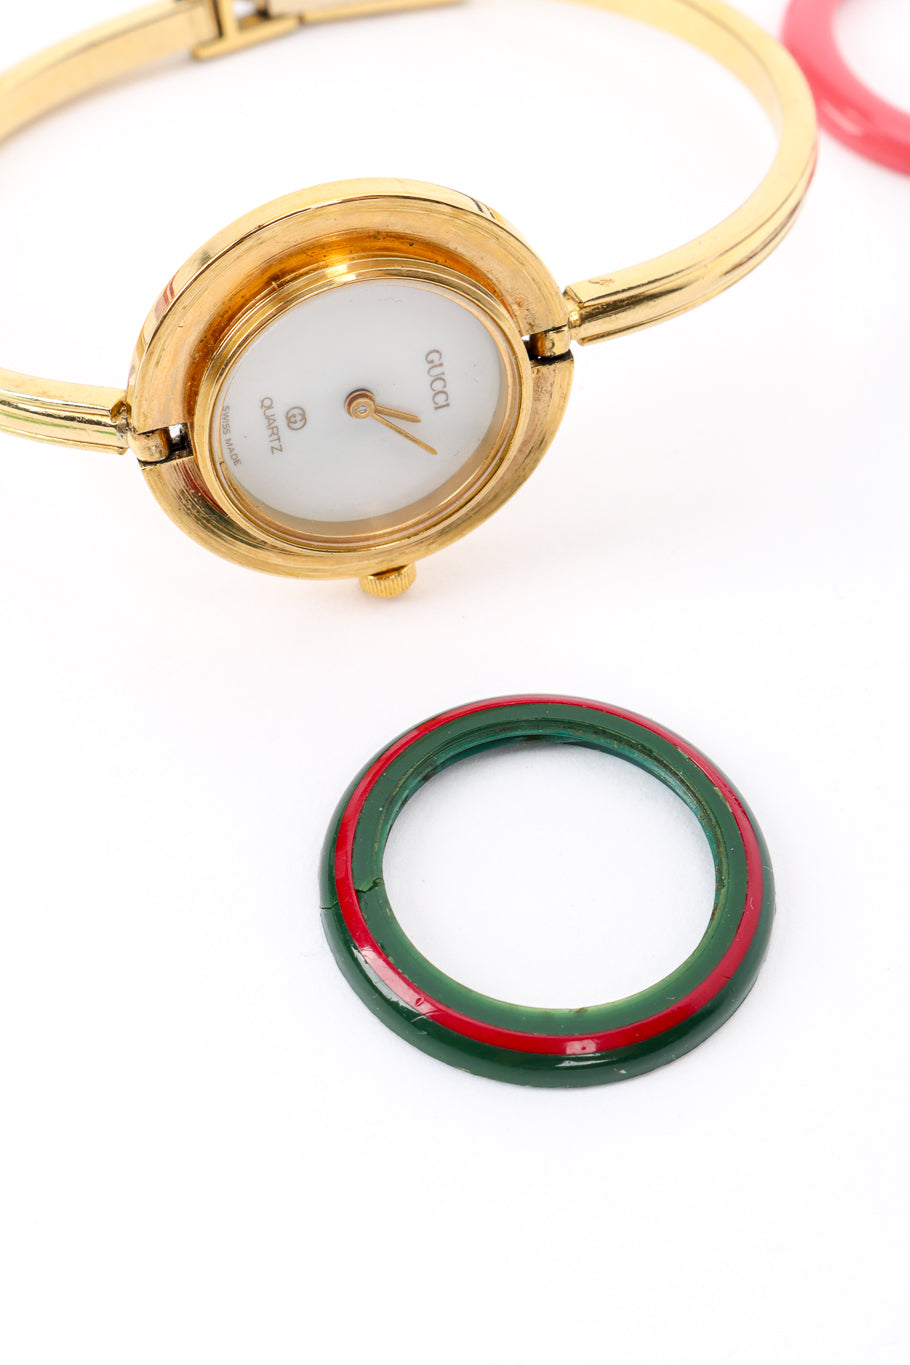 Vintage Gucci 10 Bezel Bracelet Watch Set front with bezel removed @recess la